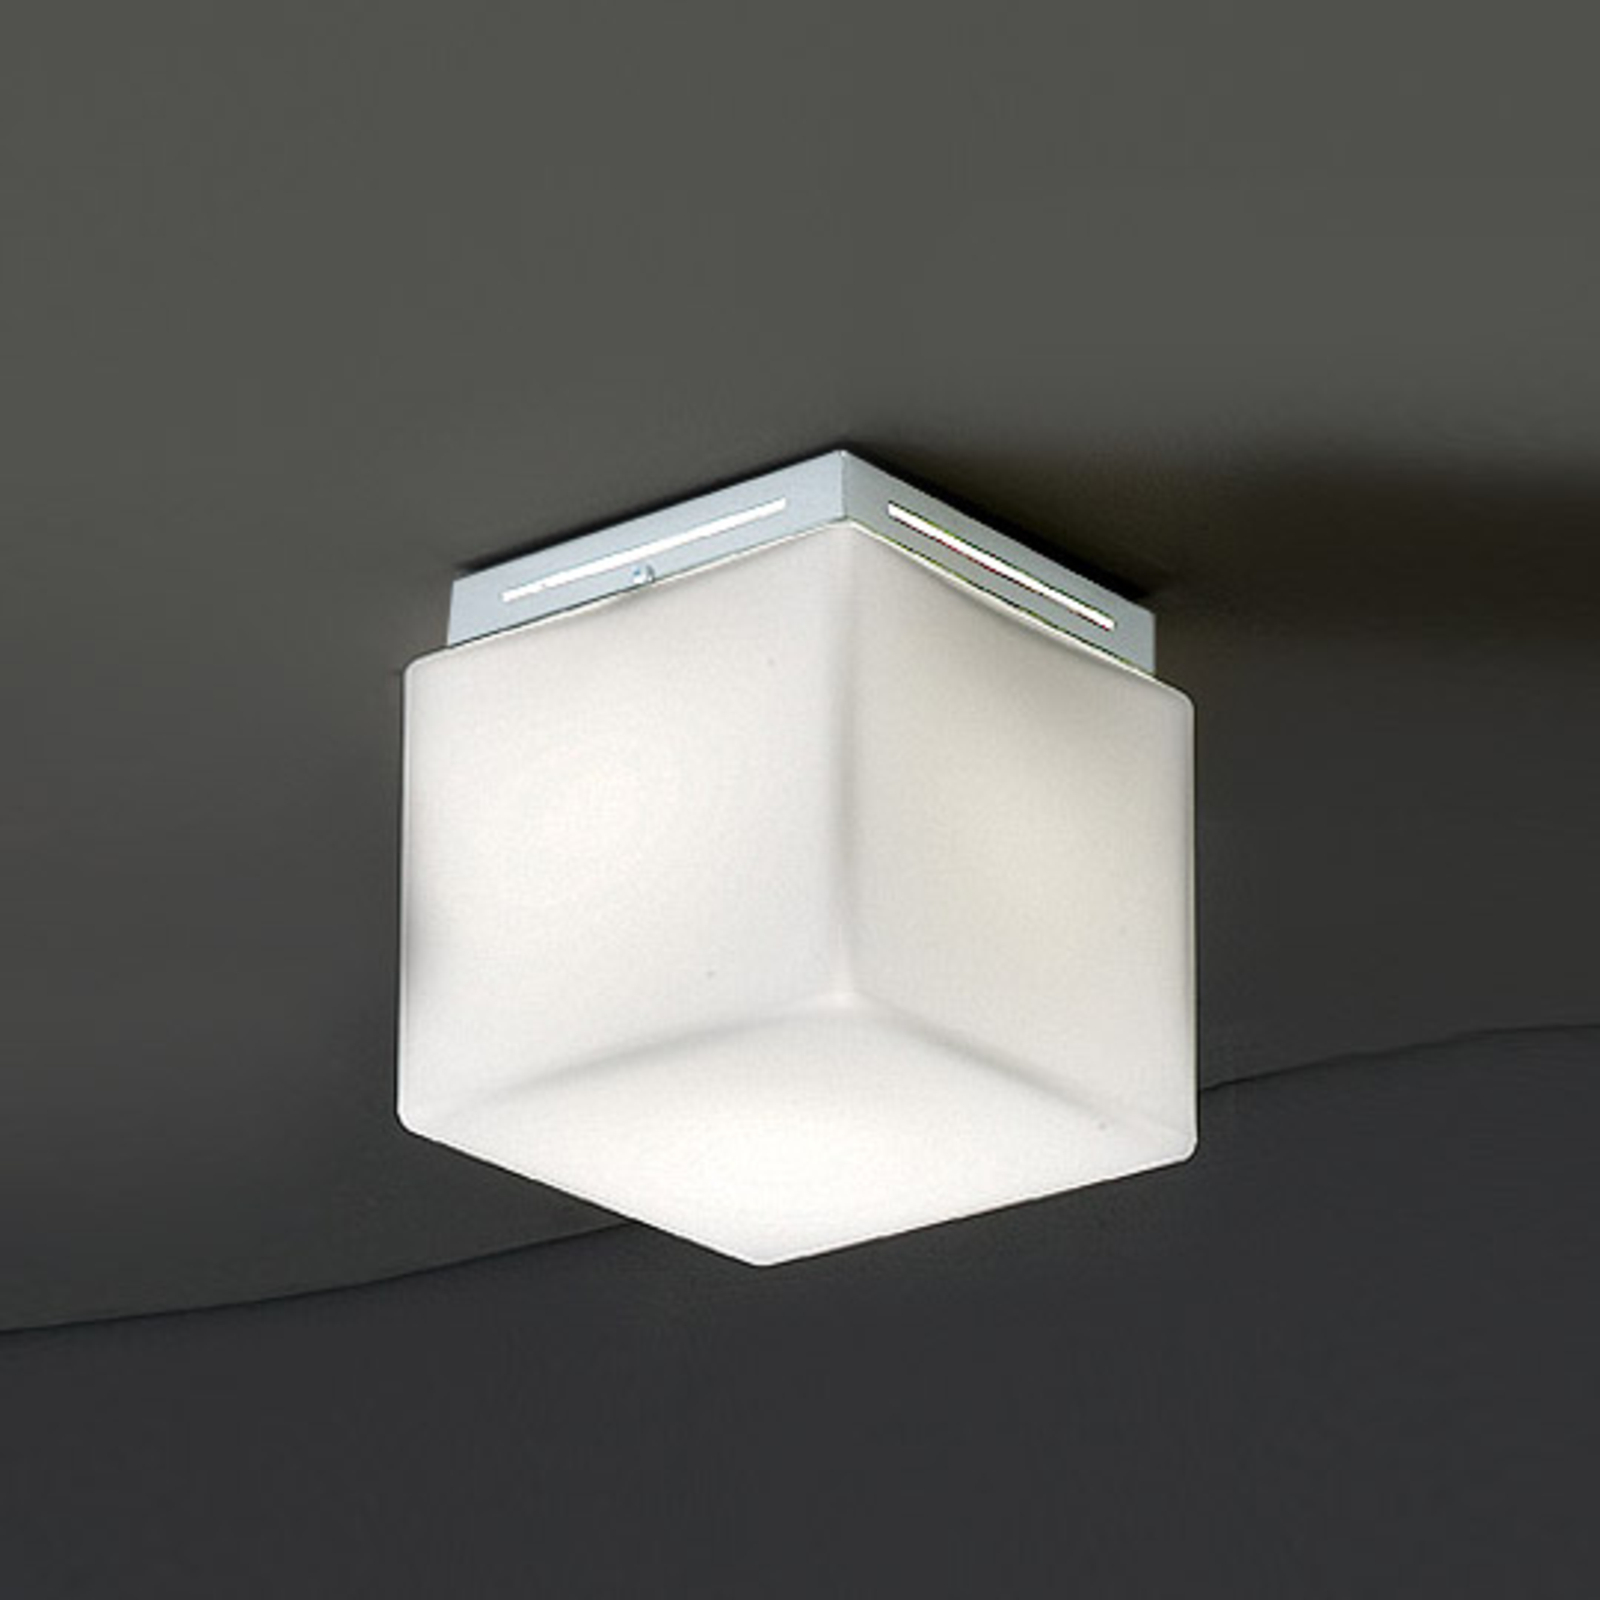 White ceiling light Cubis